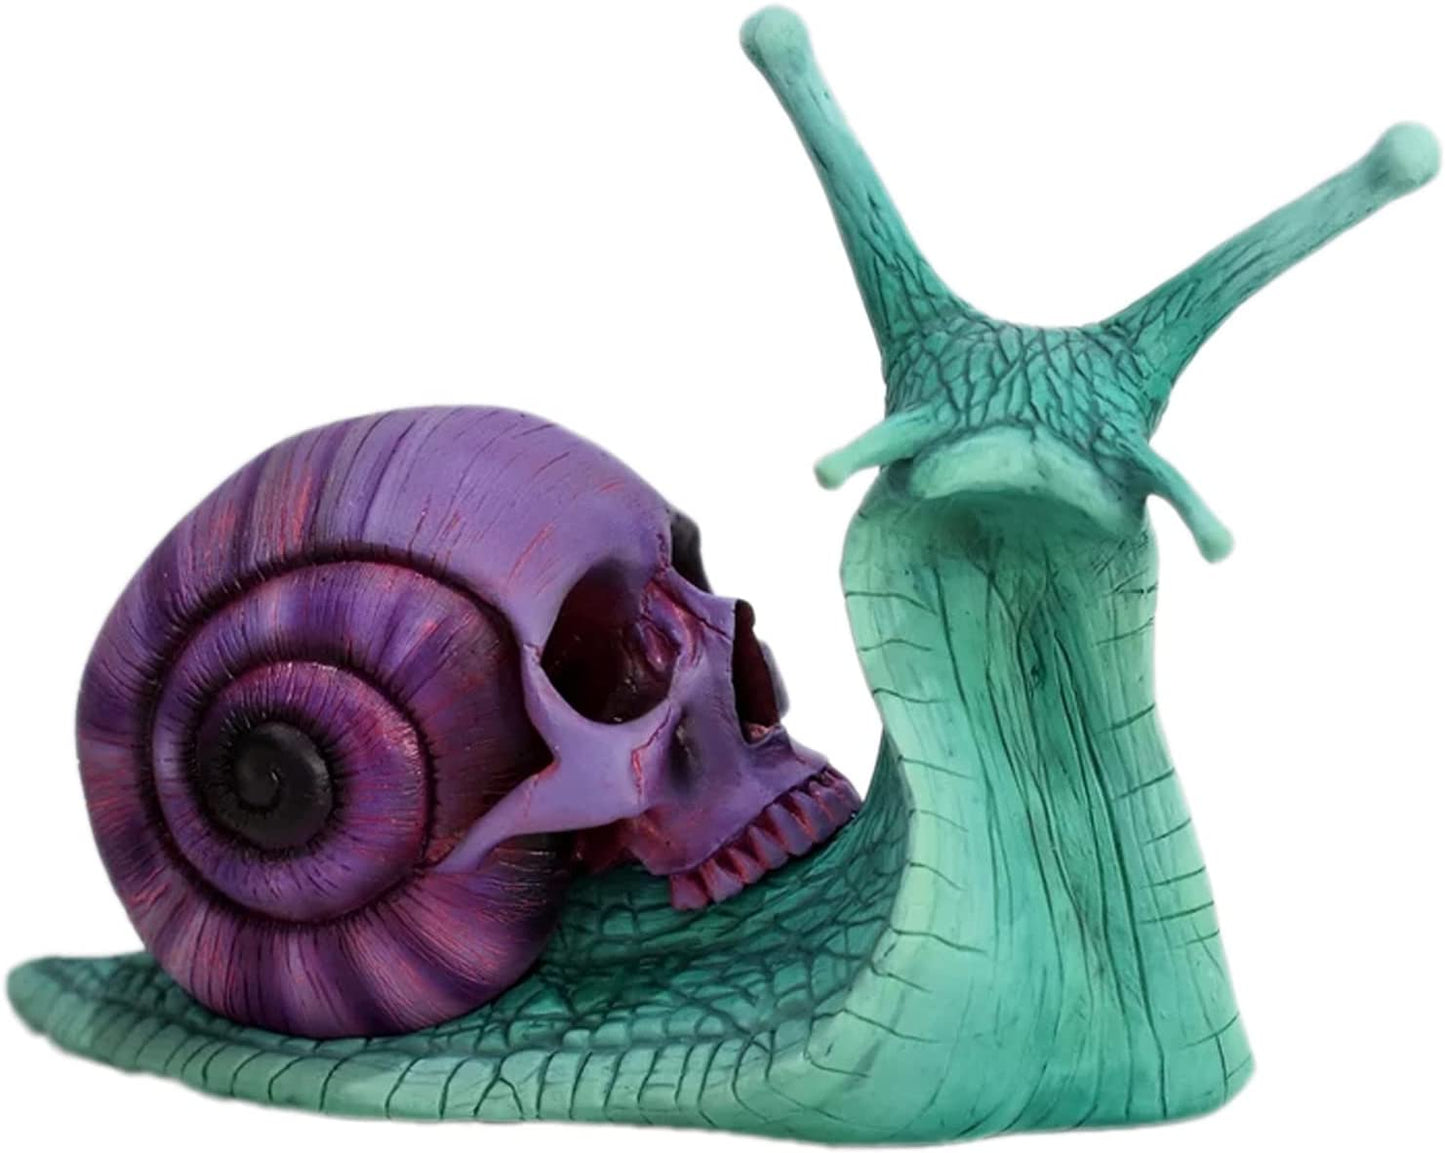 SIXIAO Snail Skull Sculpture,Snail Skull Sculpture Gothic Decoration,Halloween Decoration Snail Statue Terrace Snail Doll Crafts for Home Garden Decor(Purple),GF-695417